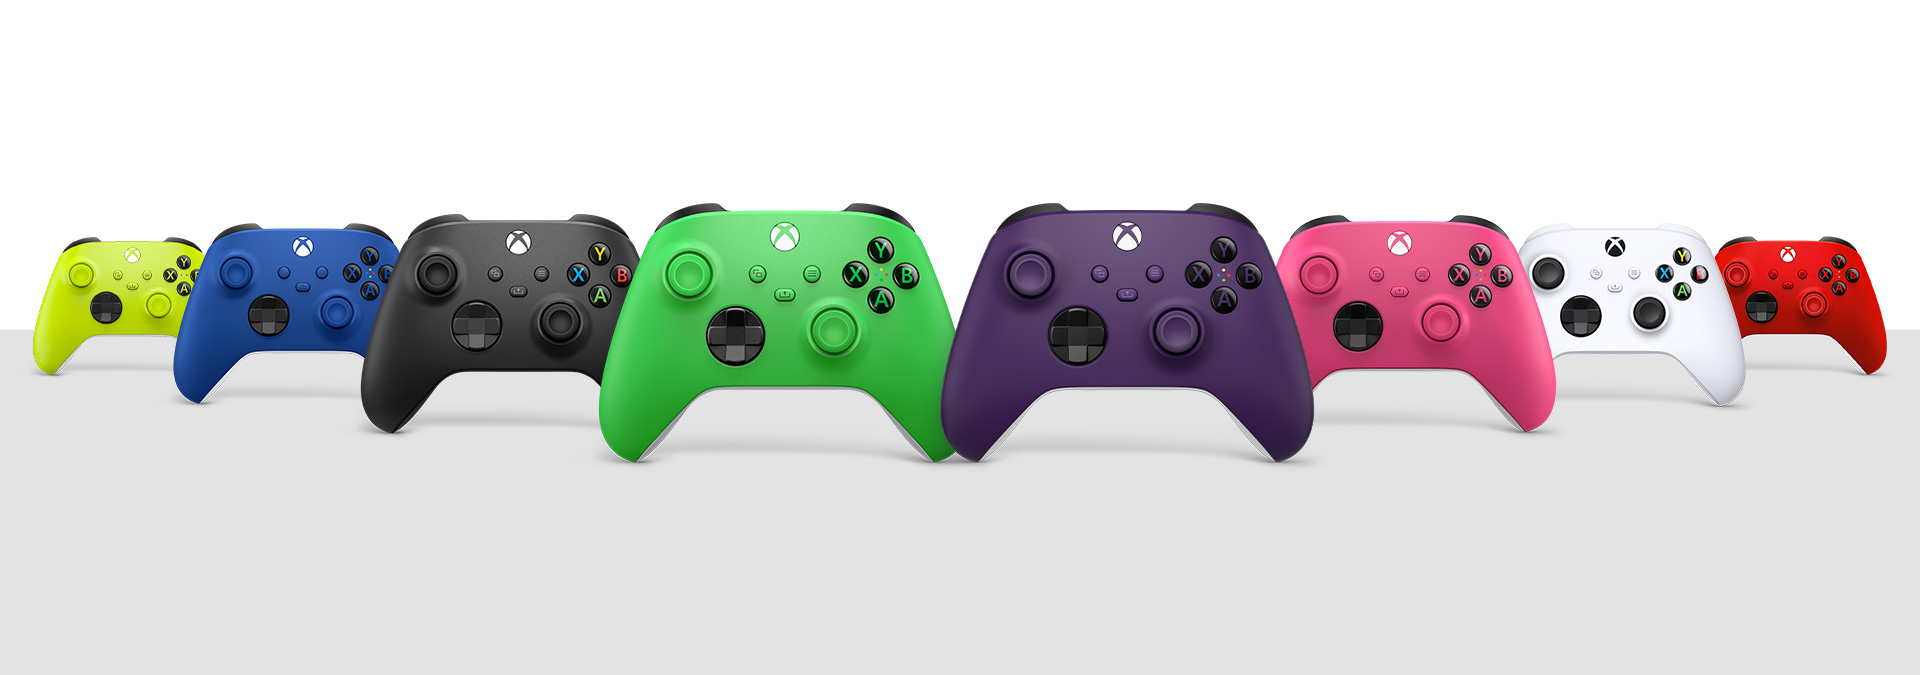 Trådløs Xbox-controller kulsort robothvid, stødblå, impulsrød, elektrisk volt, dyb pink, fartgrøn og astrallilla